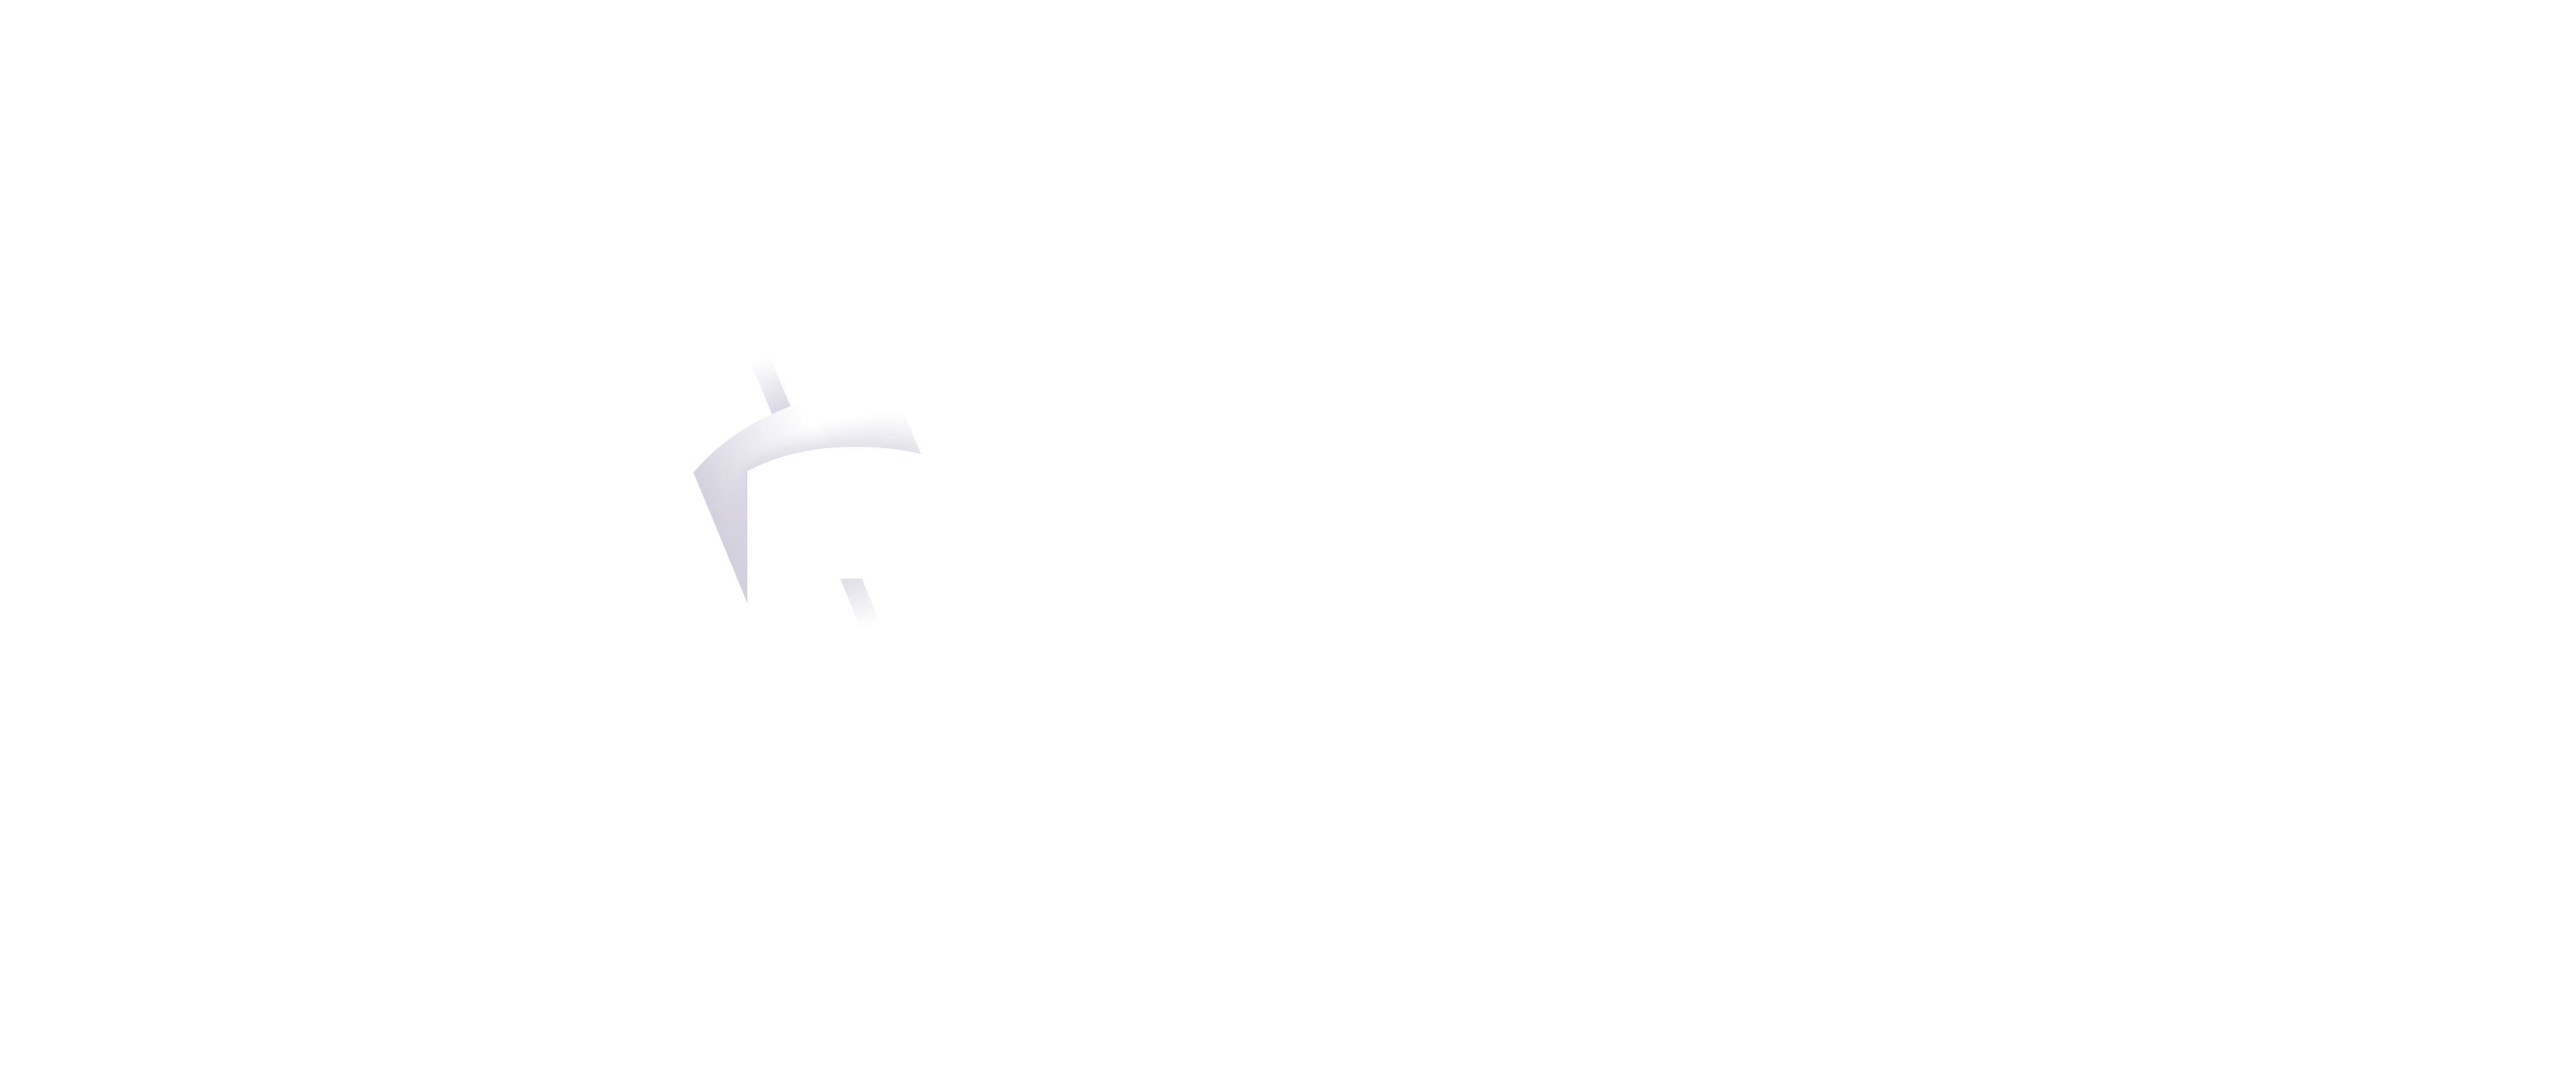 Mobile Pay logo